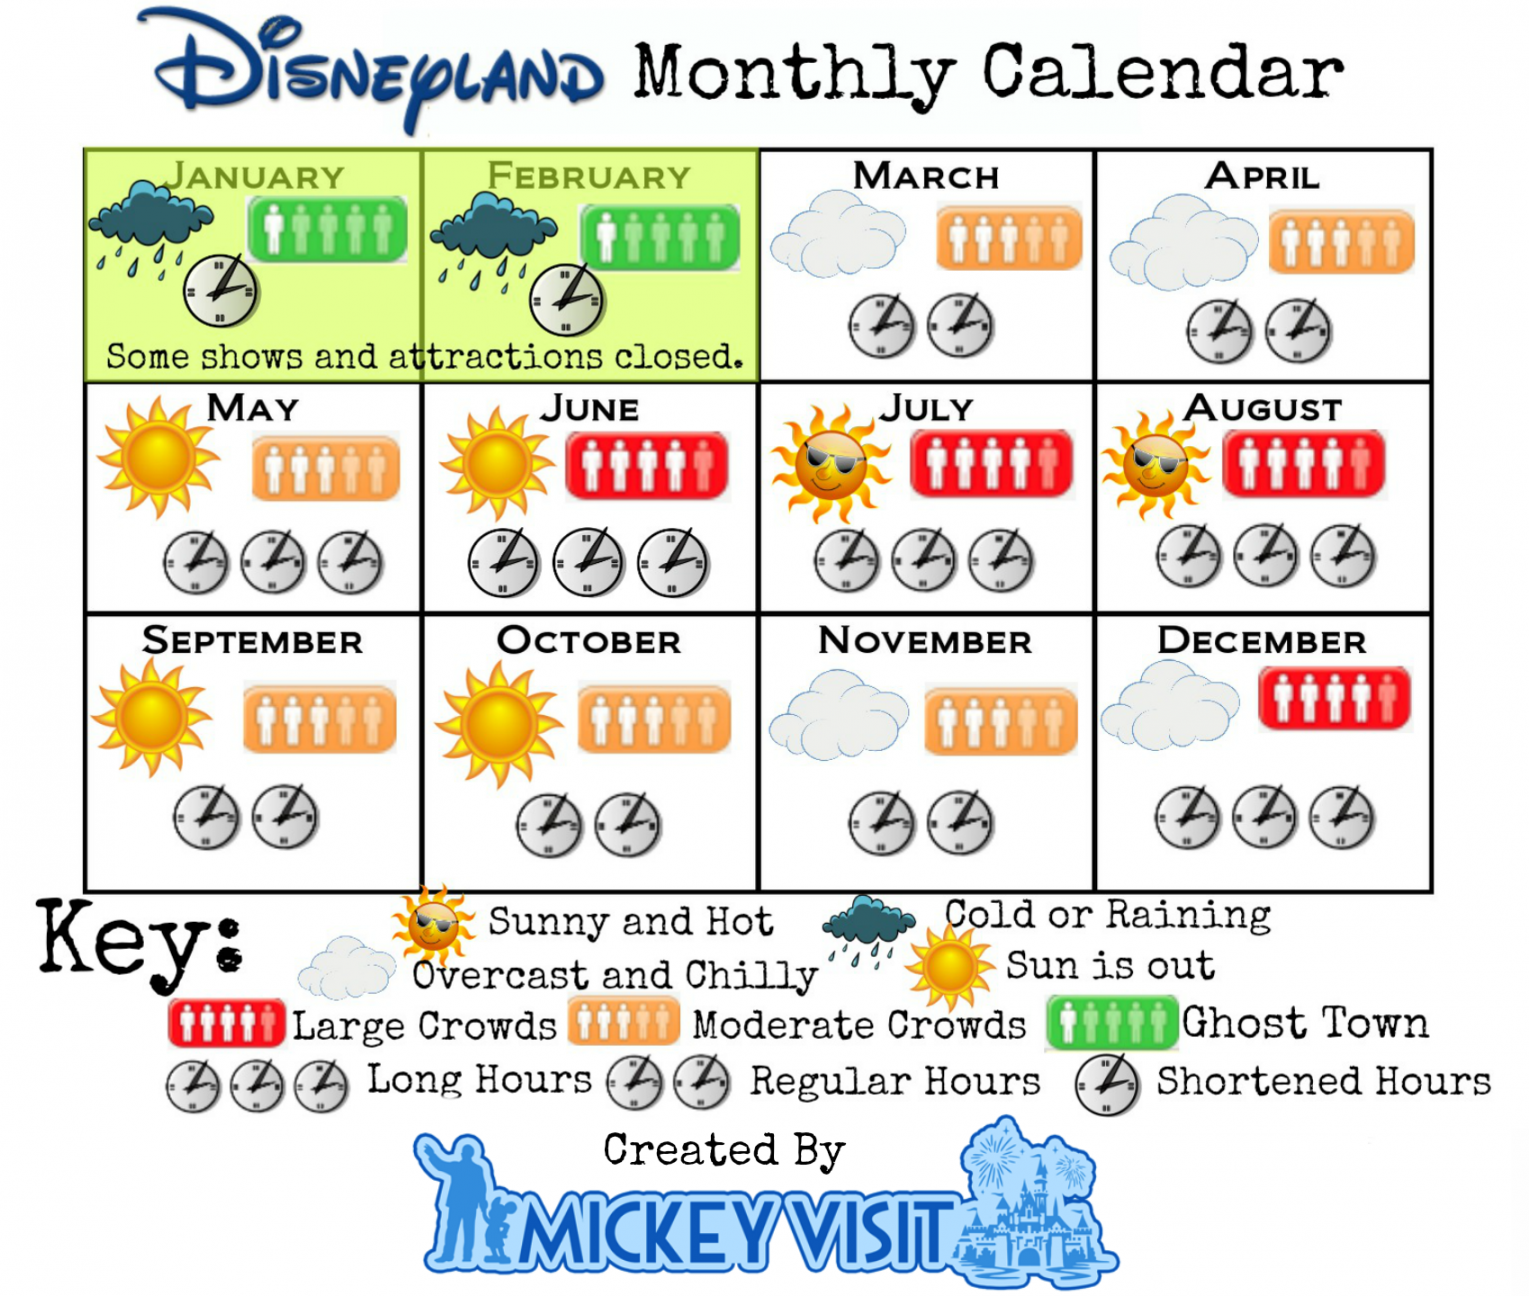 Disneyland Crowd Calendar - Best Times to Visit Disneyland in